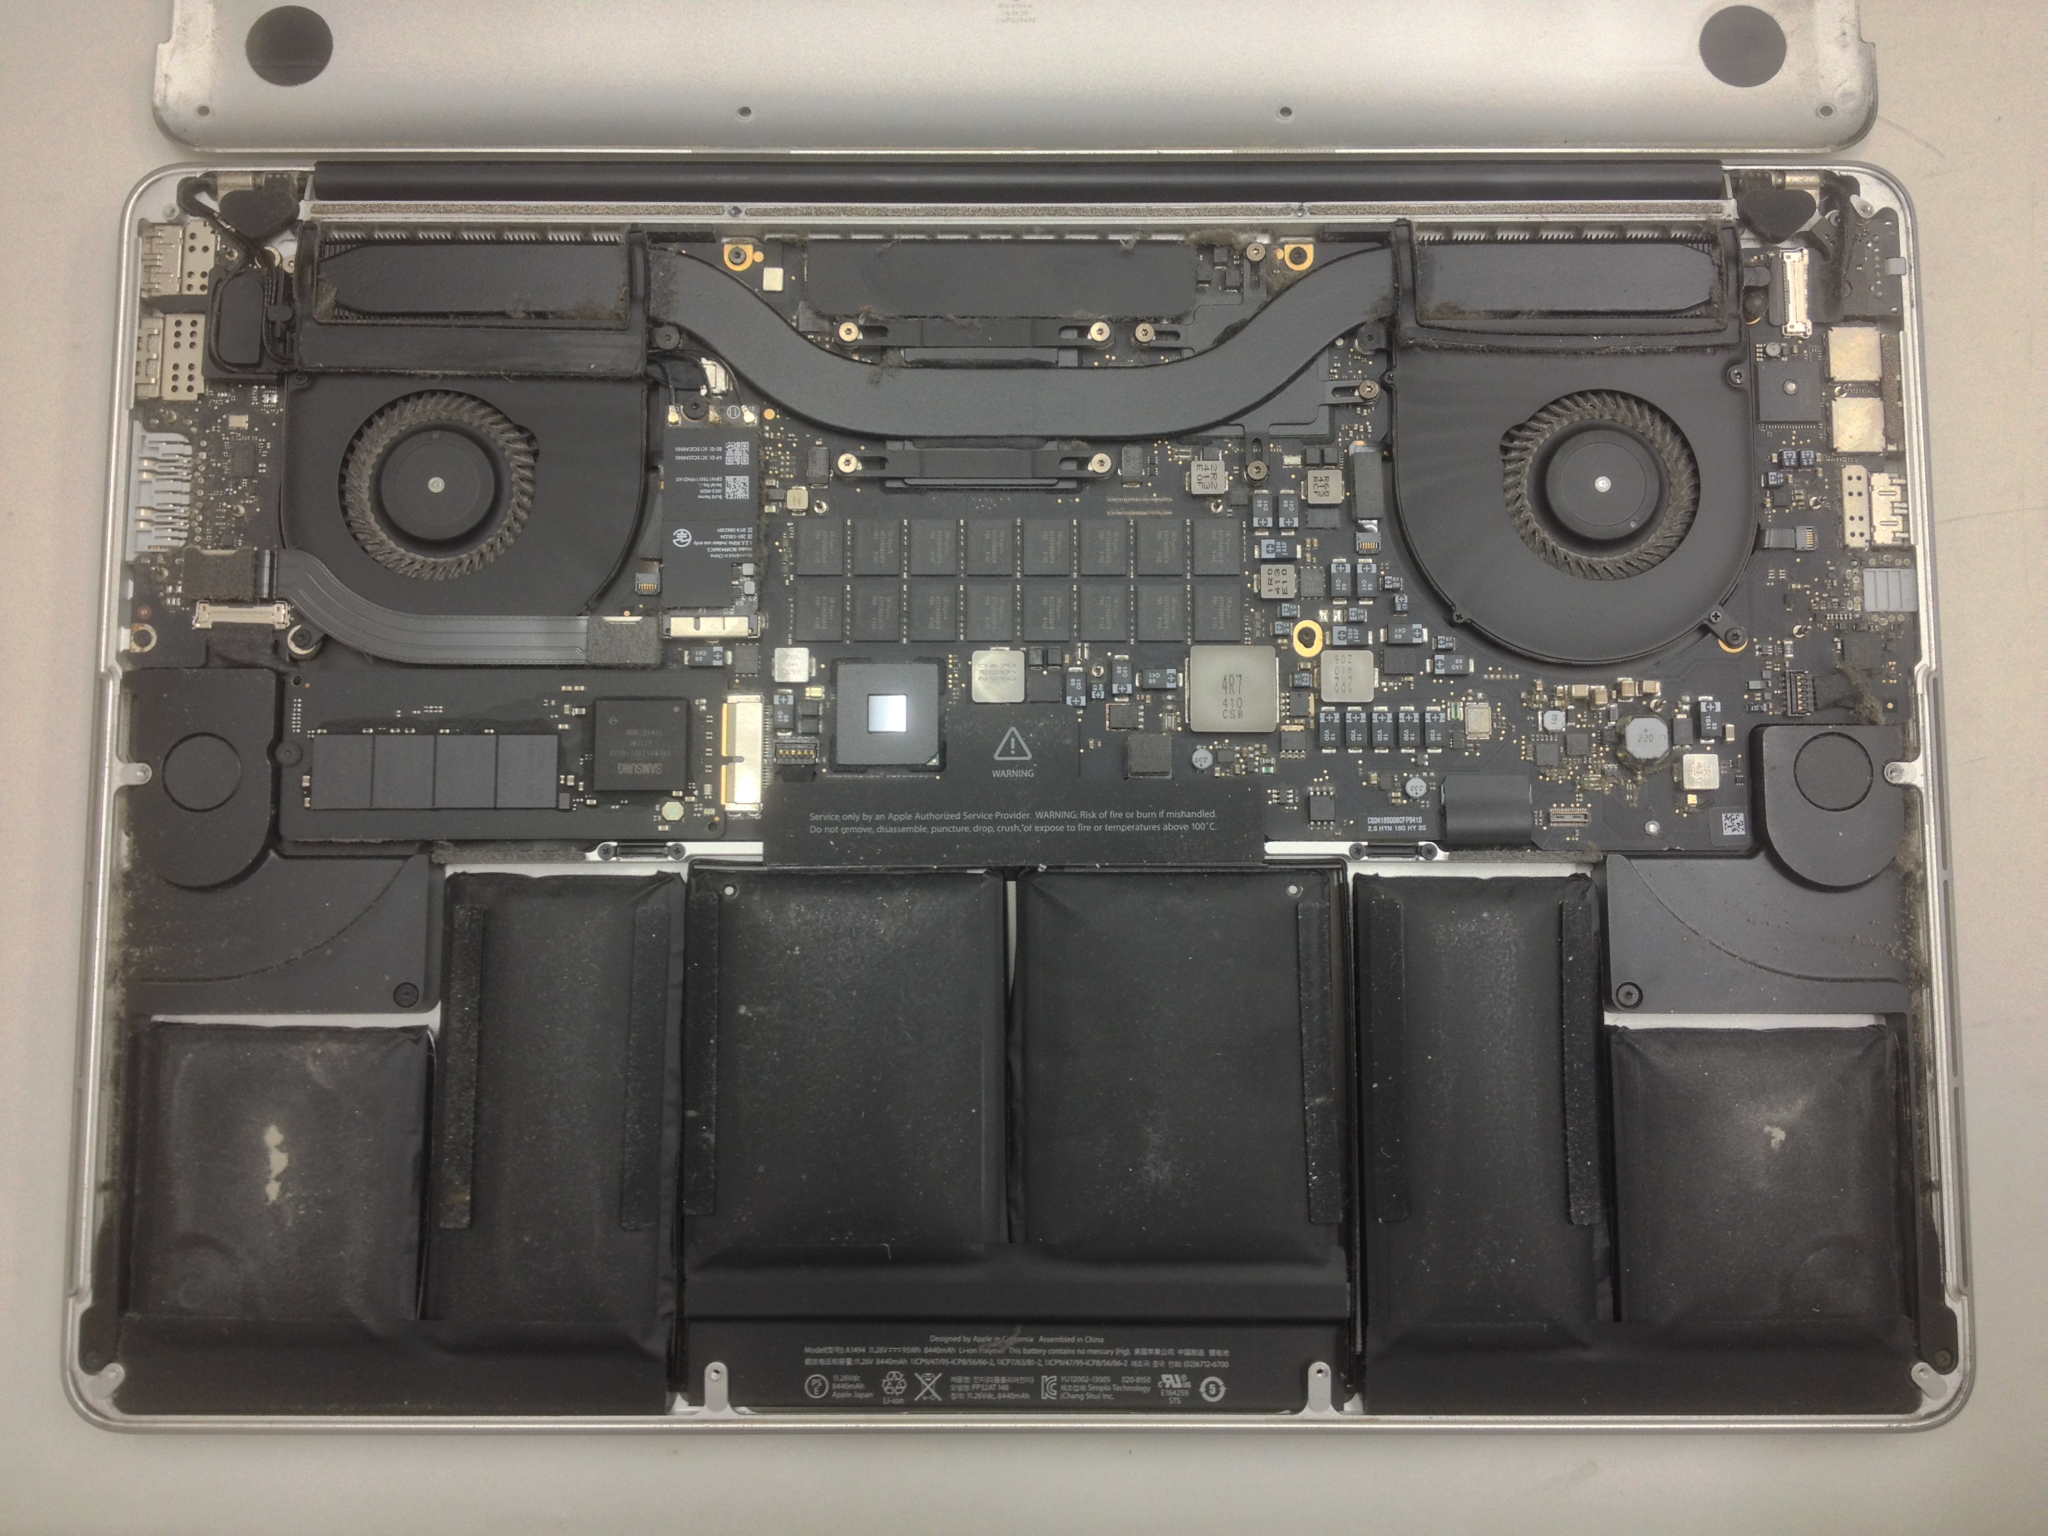 A1398 Macbook Pro Retina 15 Inch Late 13 バッテリー交換 デジタル救命